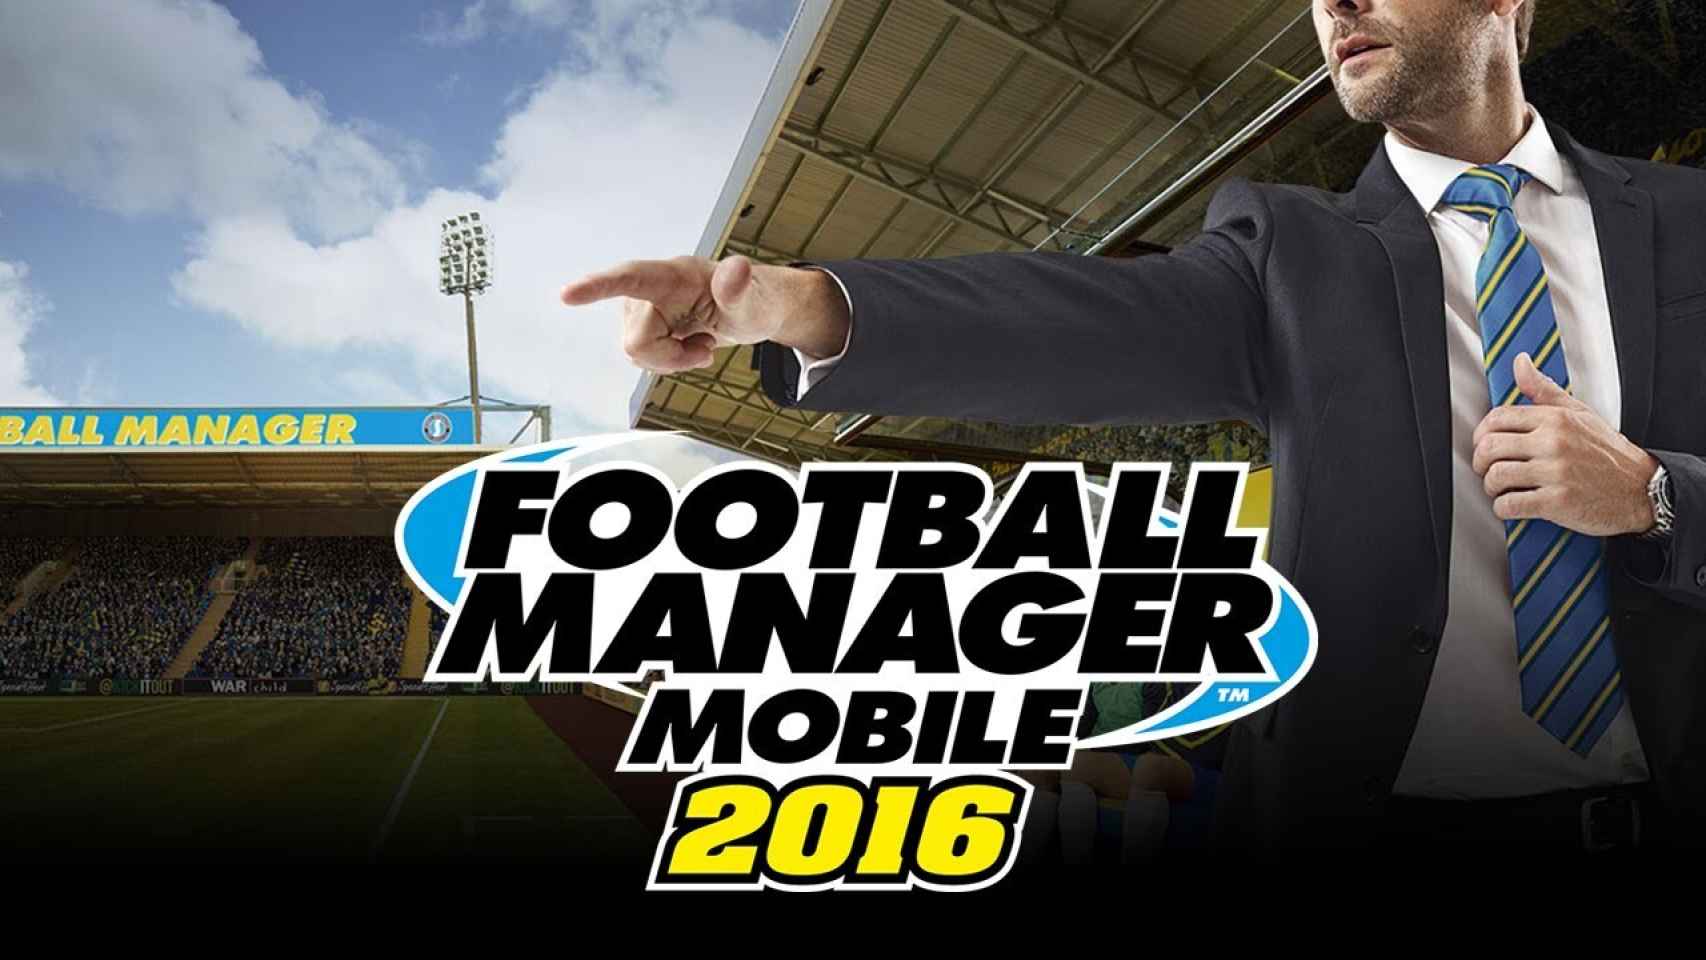 Football Manager Mobile 2016 para Android, el consume-vidas ya disponible en Google Play